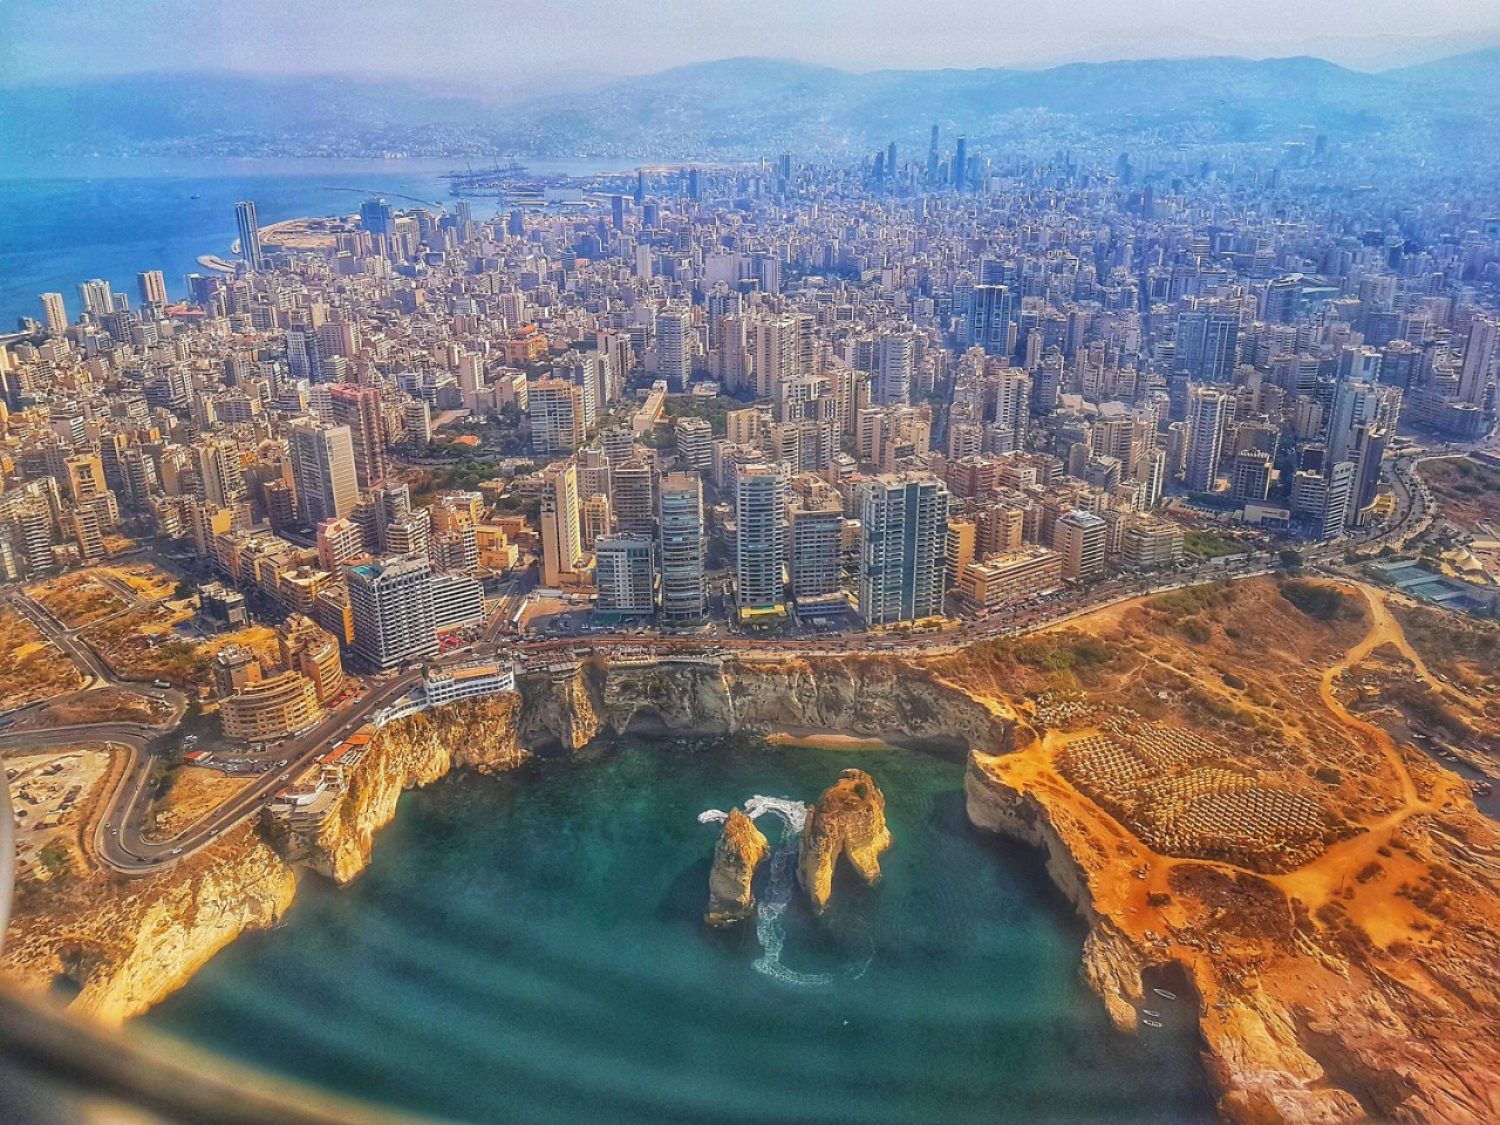 Beirut, Lebanon (Alain Abou-Atmeh)